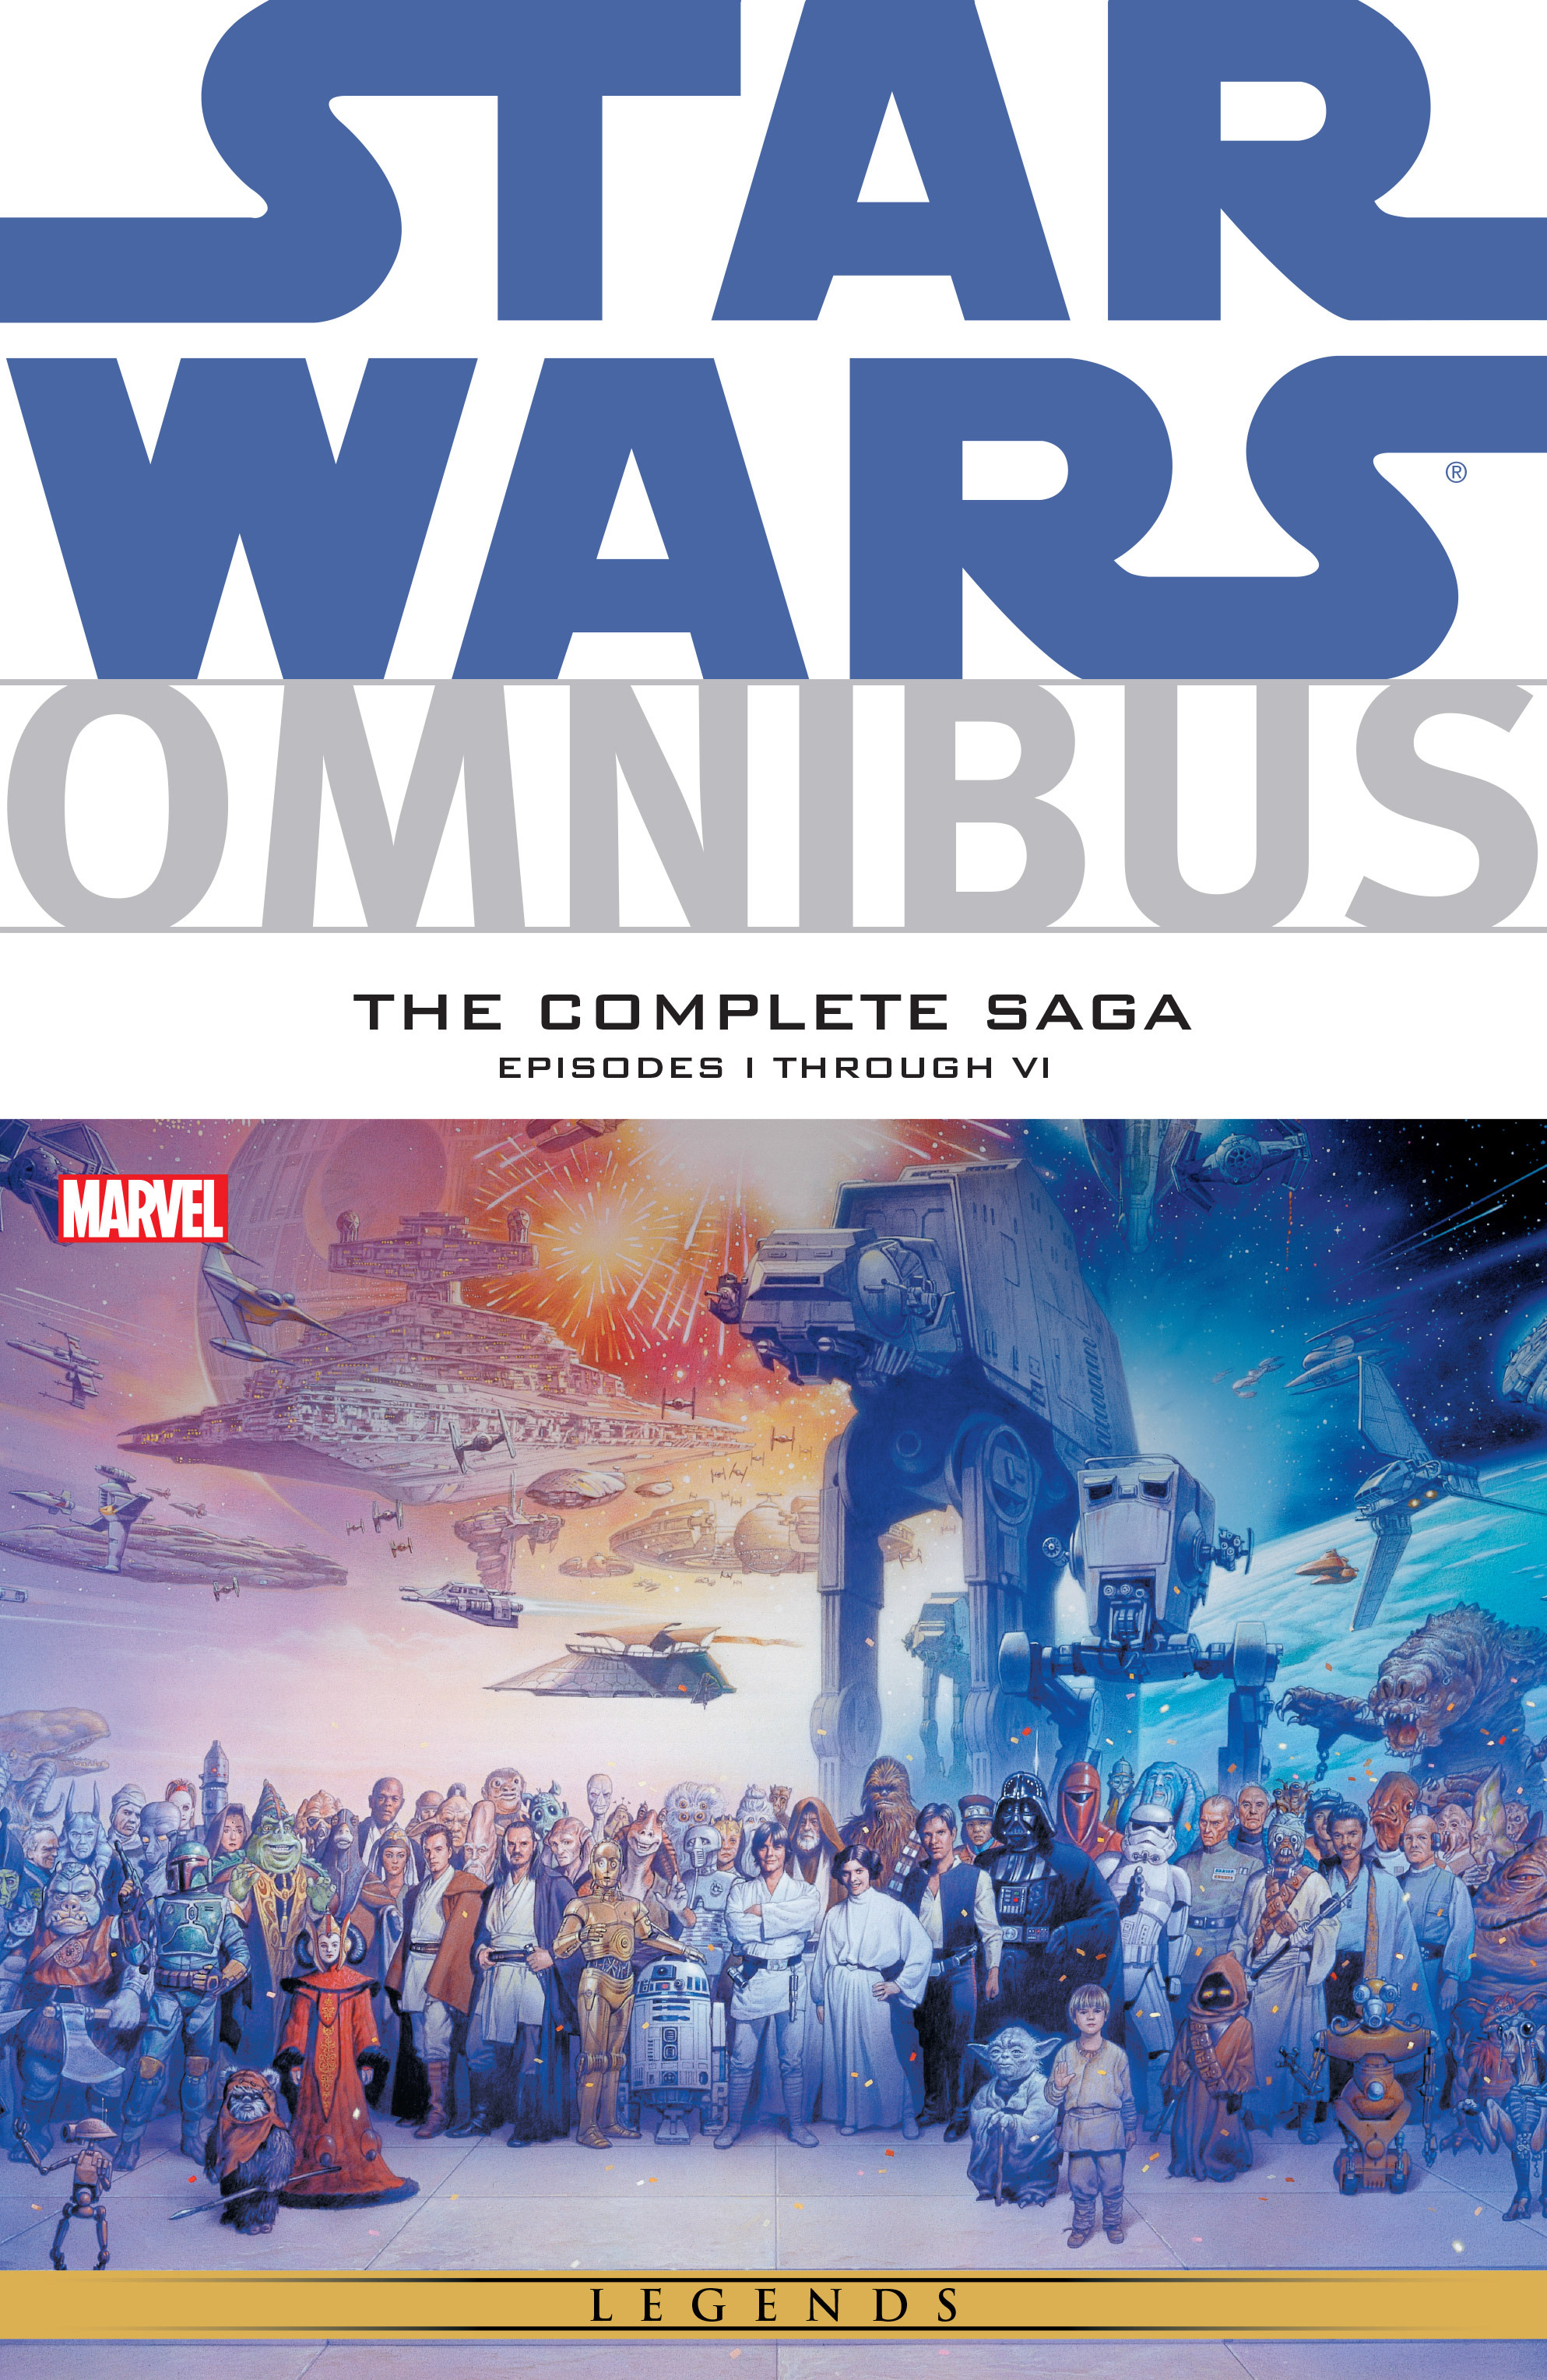 Star Wars Omnibus - The Complete Saga (2015)